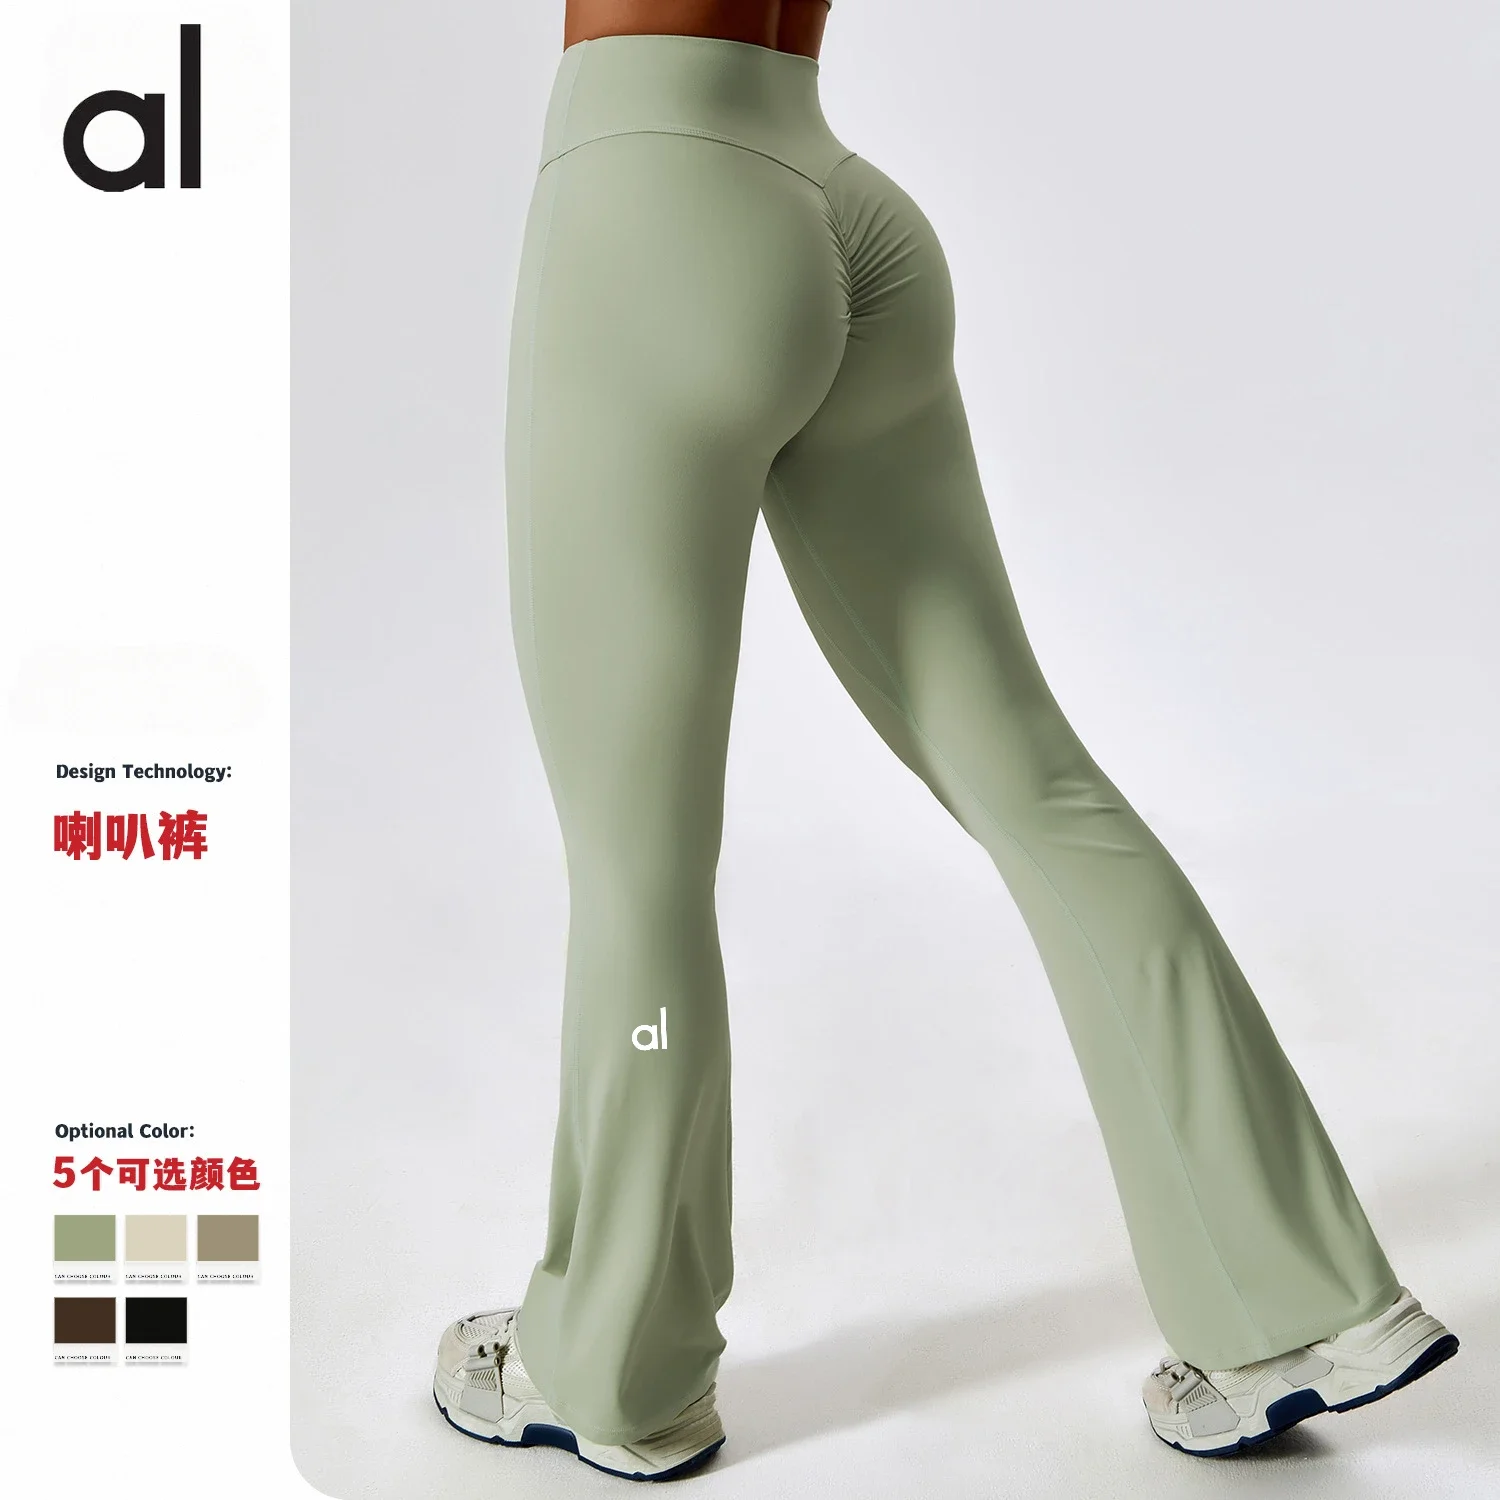 

AL Yoga Pants Woman Wide Leg Pants Tight Nude Feel Hip Lift Yoga Flare Pants Dance High Waist Micro Flare Casual Sports Pants